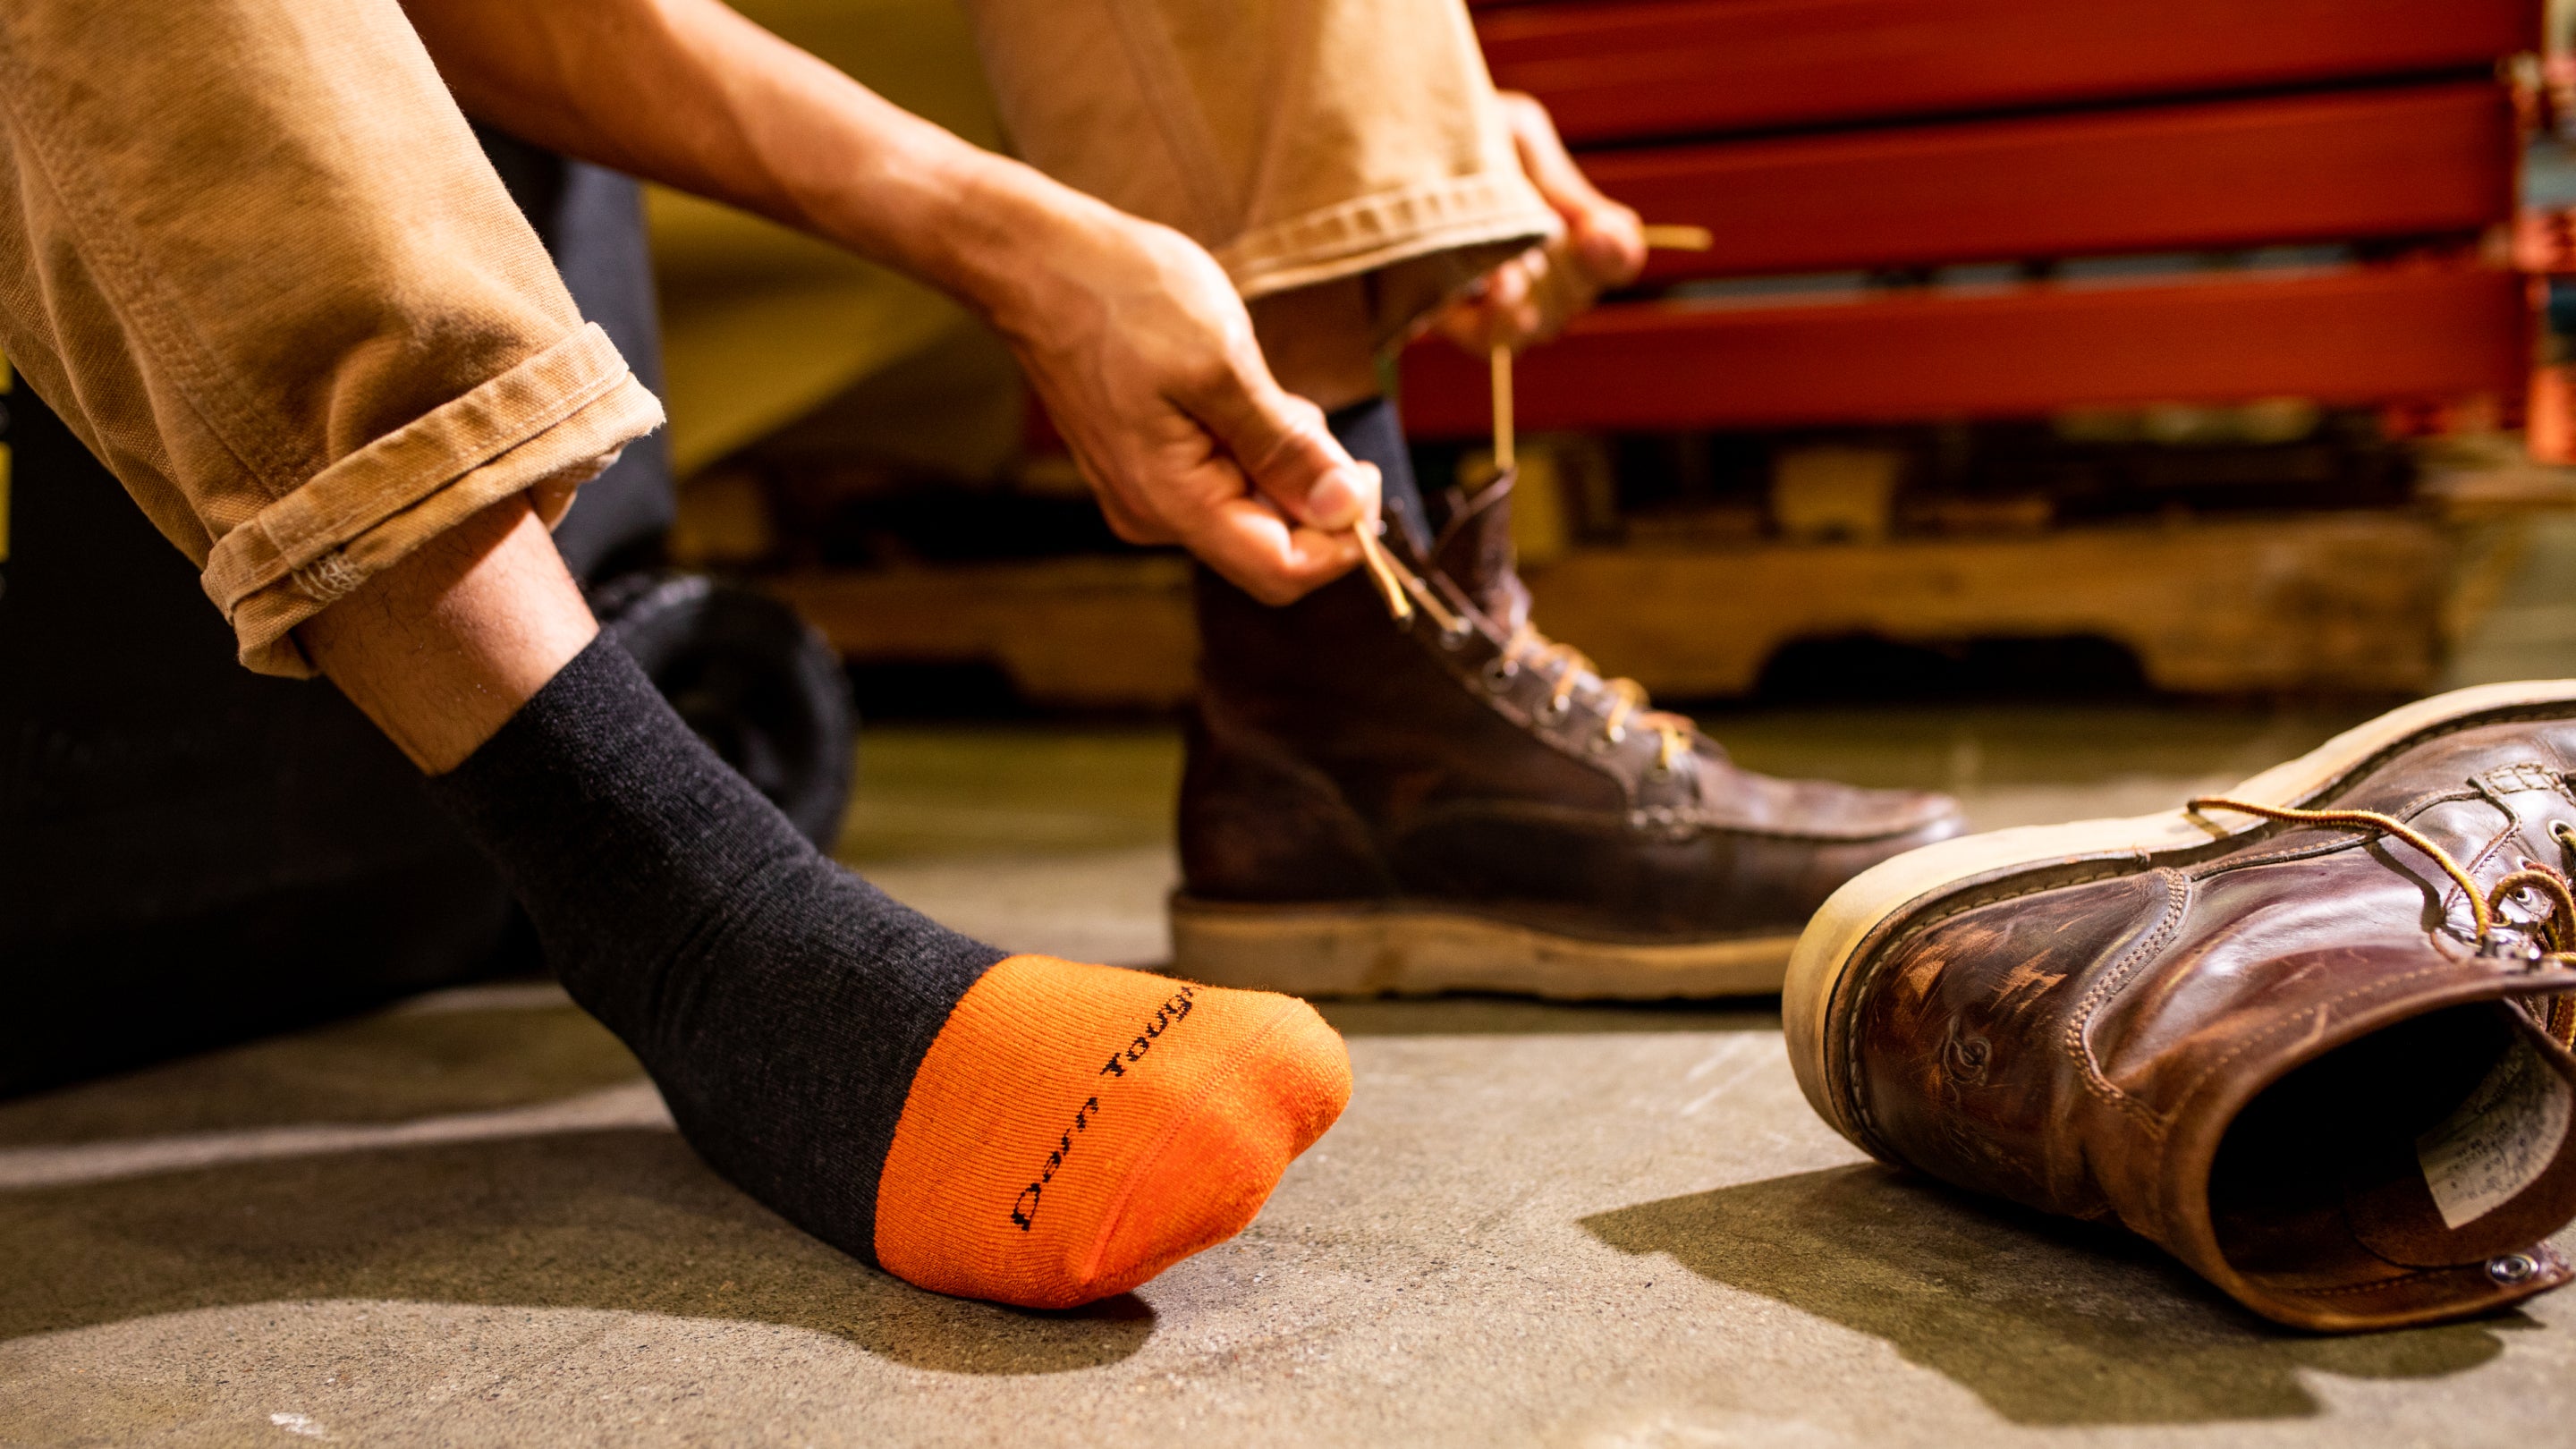 Darn Tough Men's Steely Boot Cush W/Full Cush Toe Box Graphite socks XL OS  : : Clothing, Shoes & Accessories